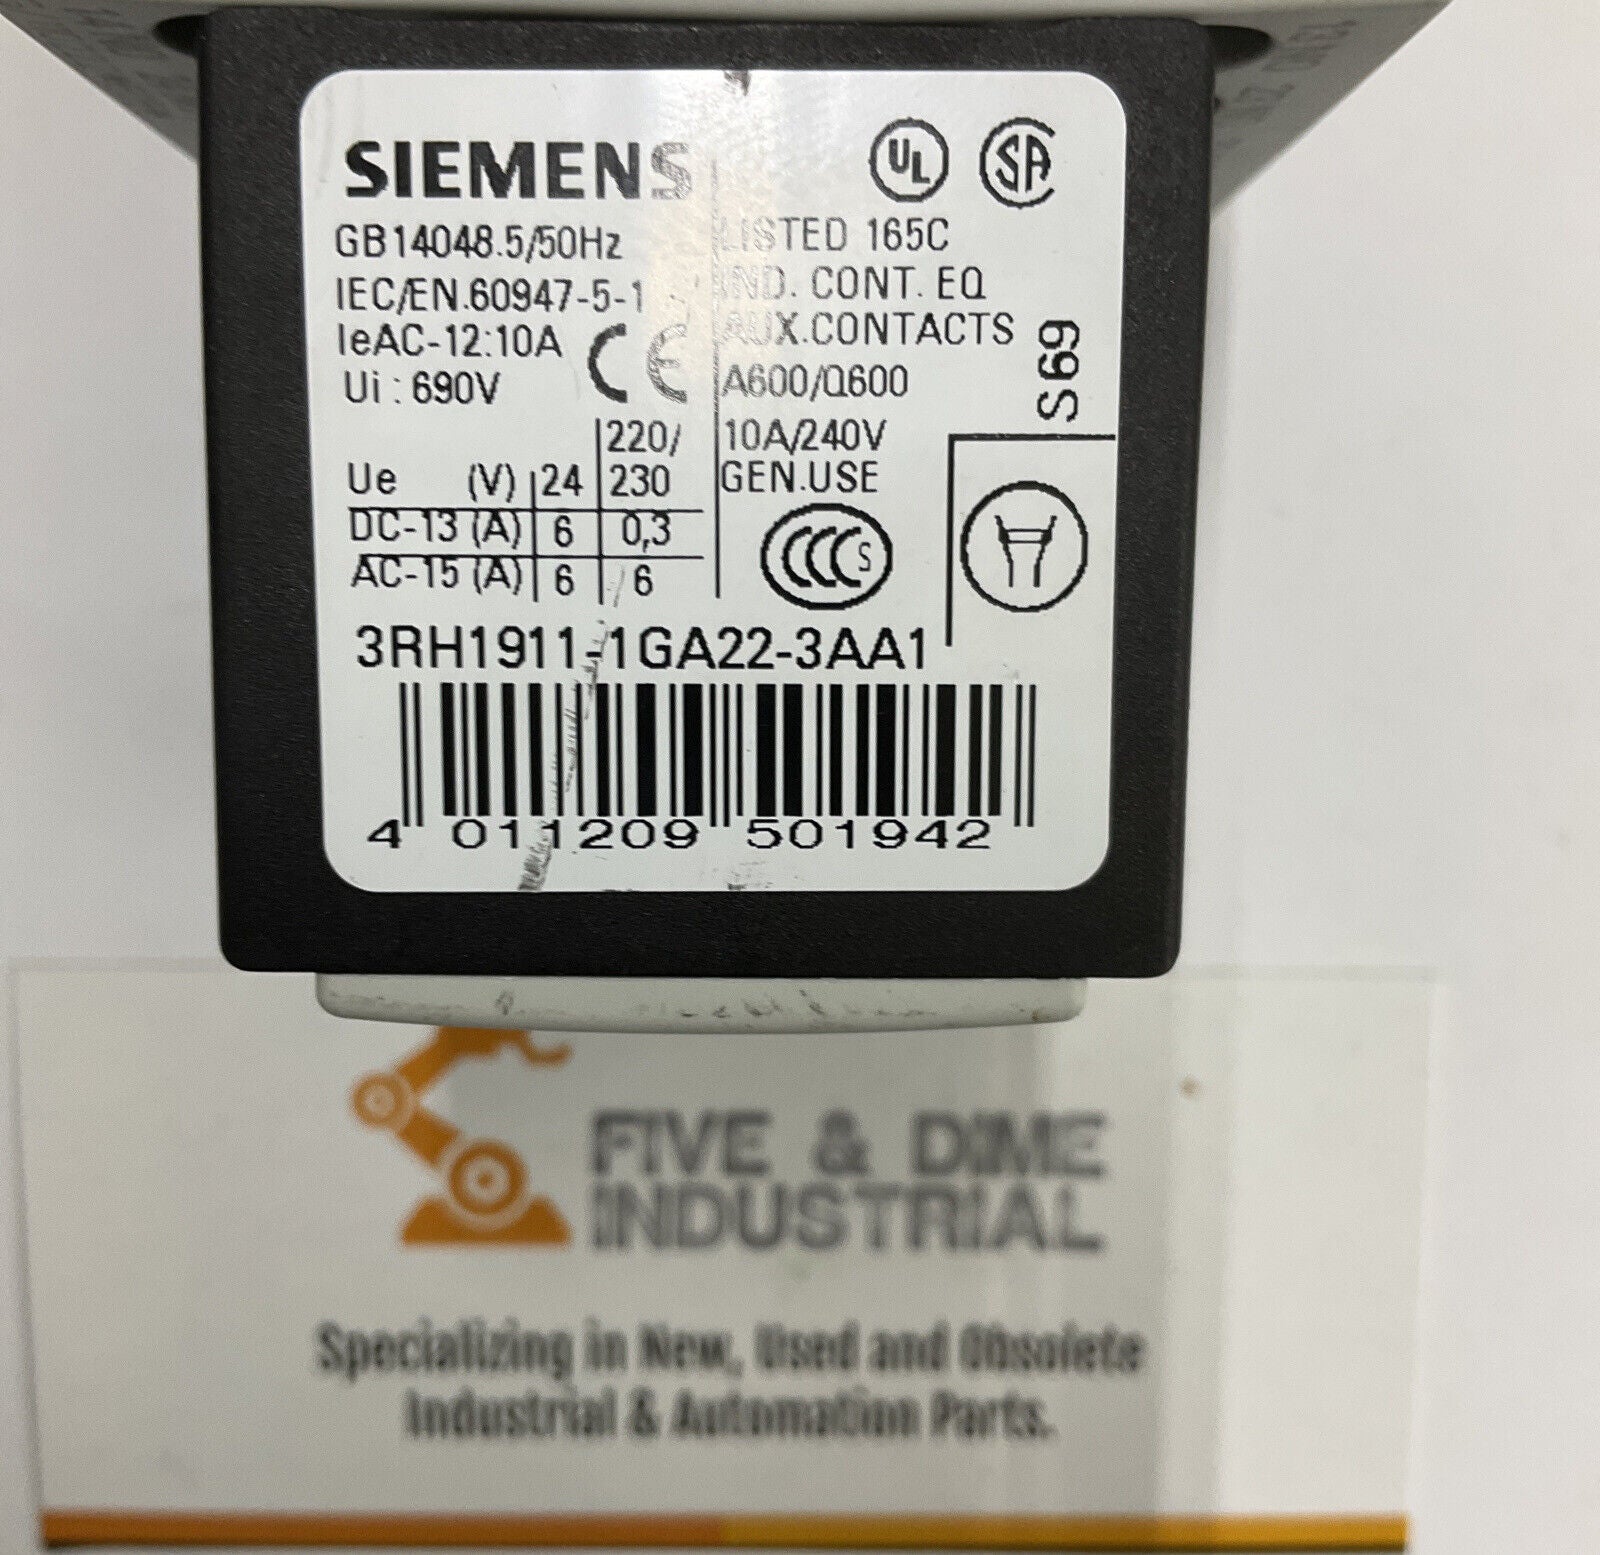 Siemens Sirus 3ZX1012-ORH11-1AA1 Contactor Block w/ 3RH1911-1GA22-3AAA1 (BL227)